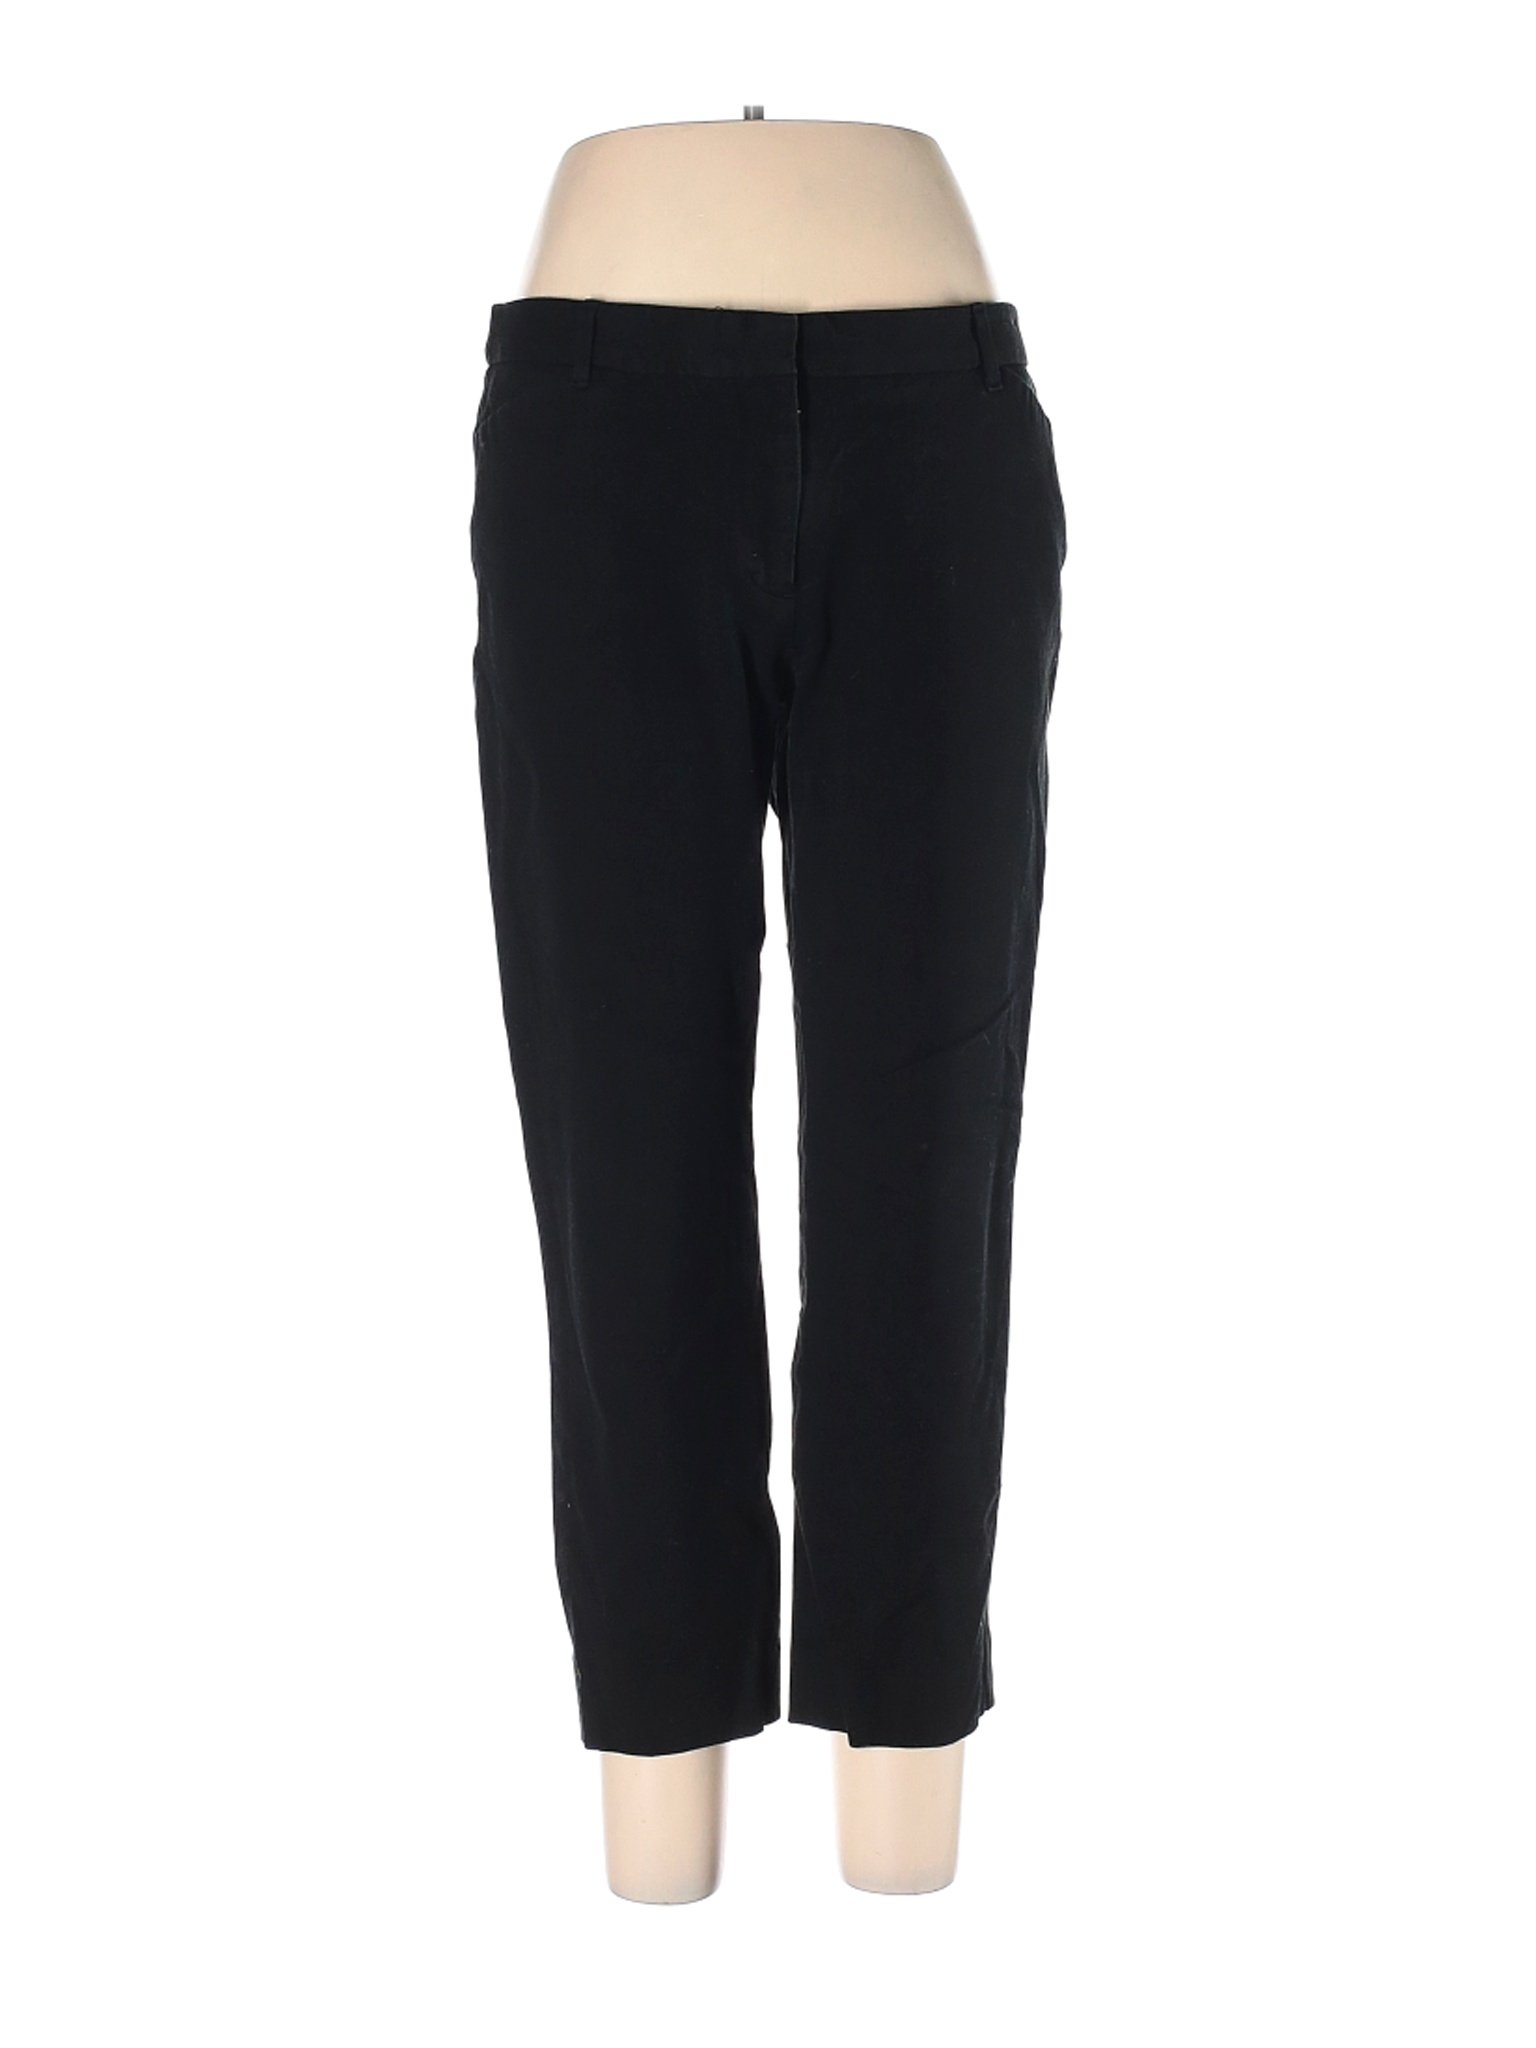 Gap Women Black Casual Pants 12 | eBay